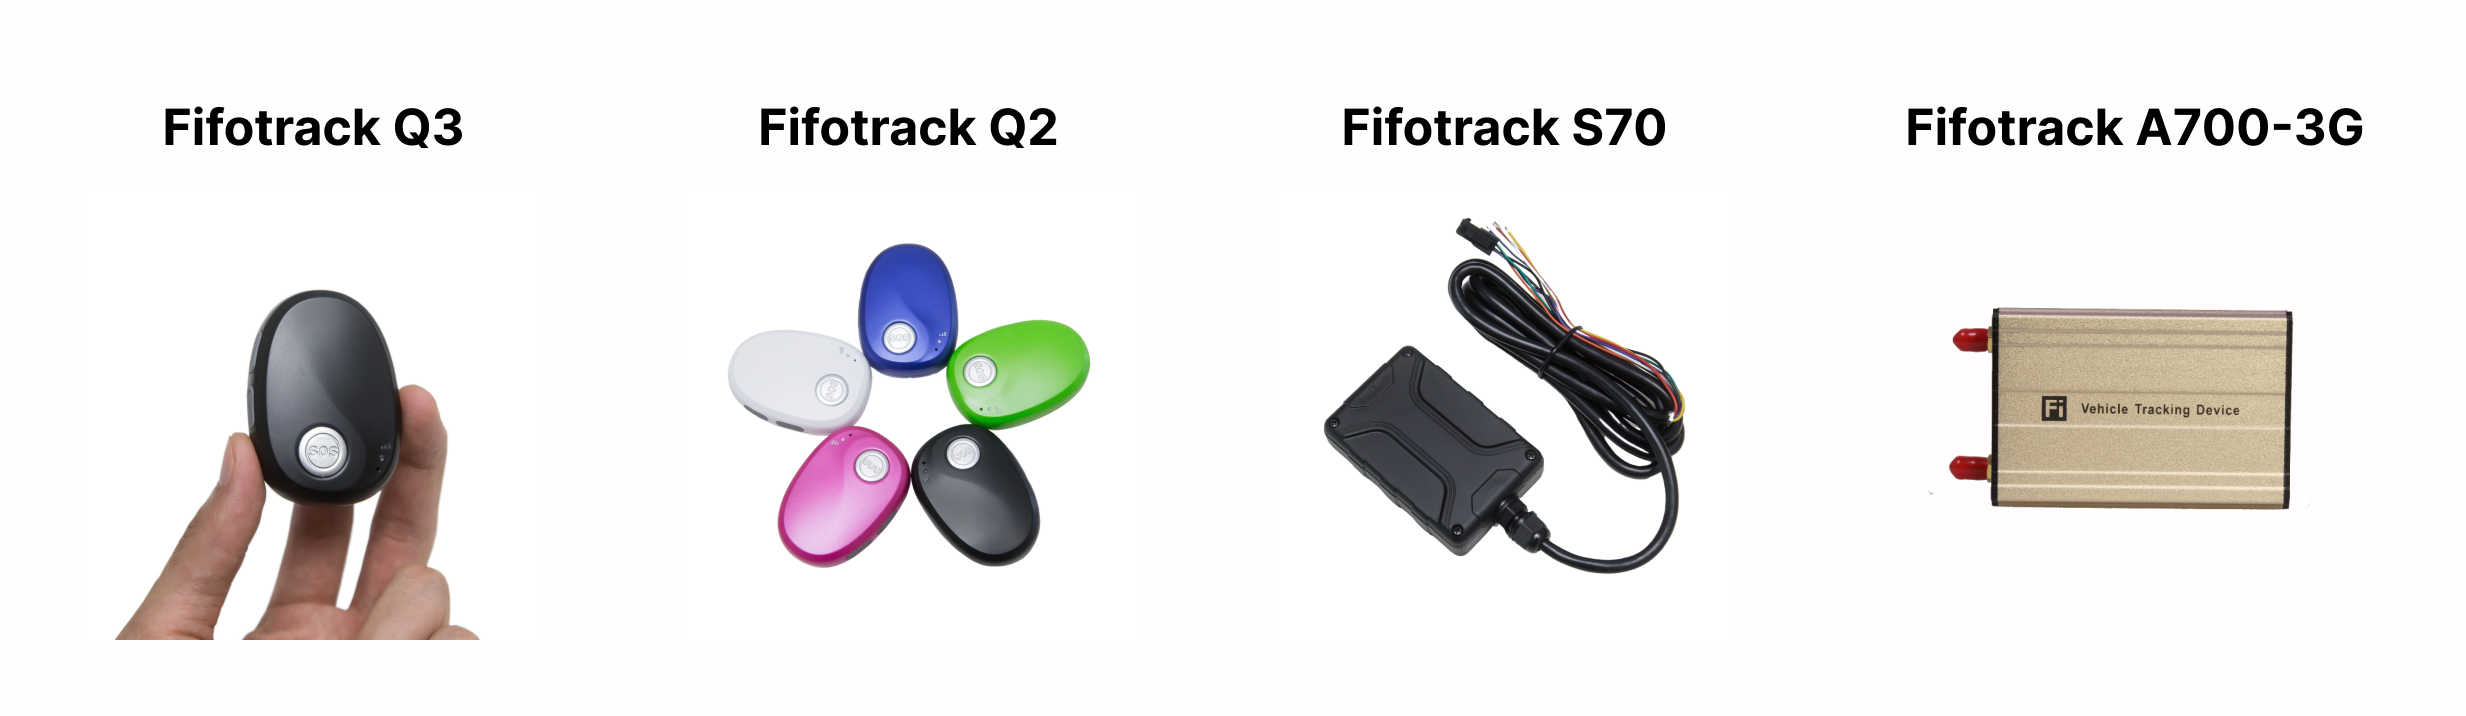 Fifotrack y GPS-Trace